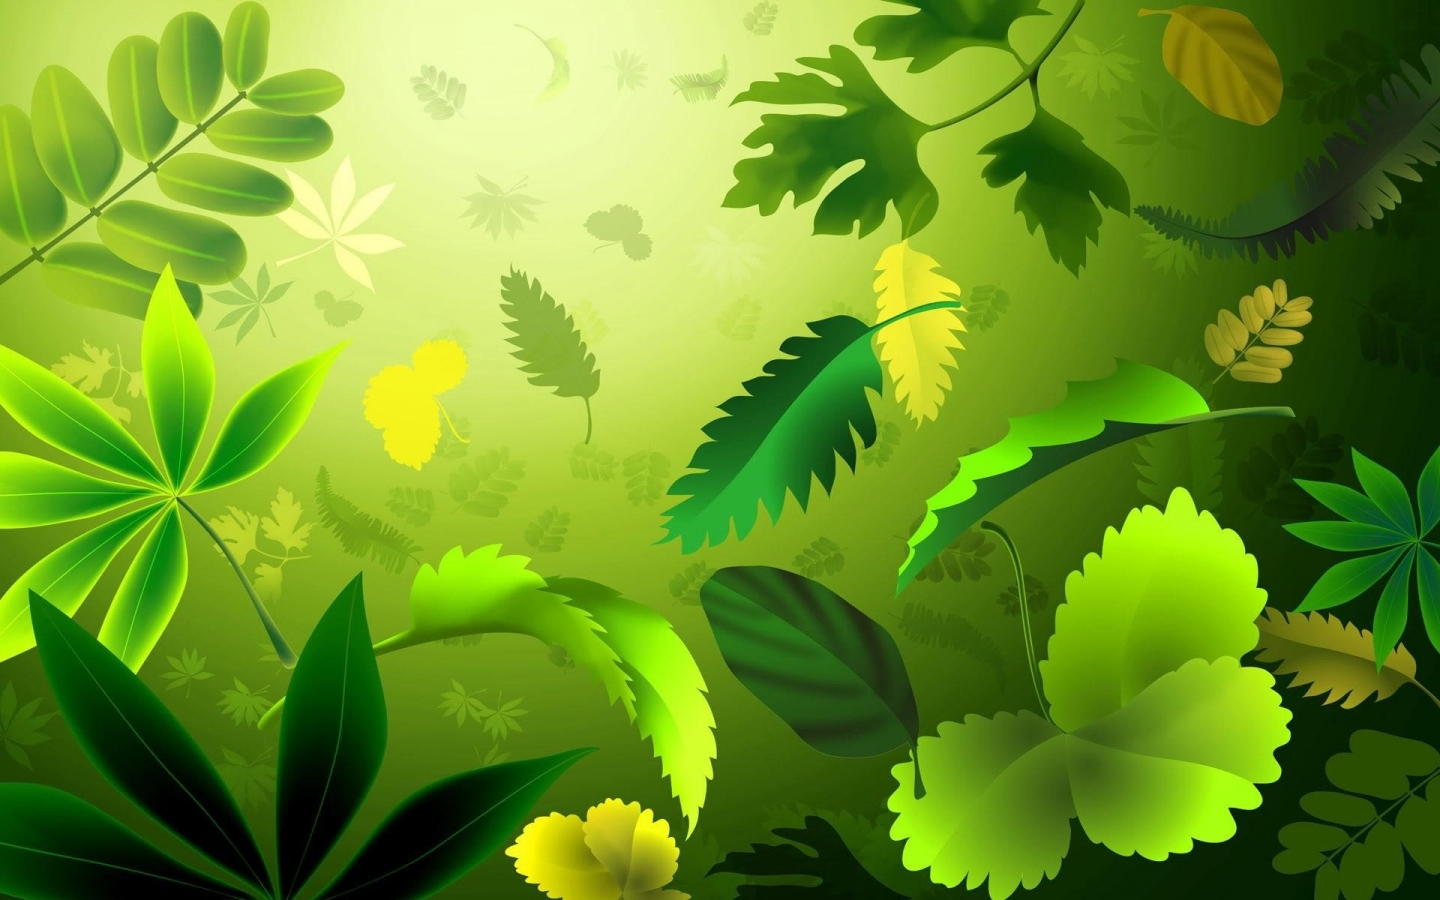 Drift Away Green Leaves for 1440 x 900 widescreen resolution